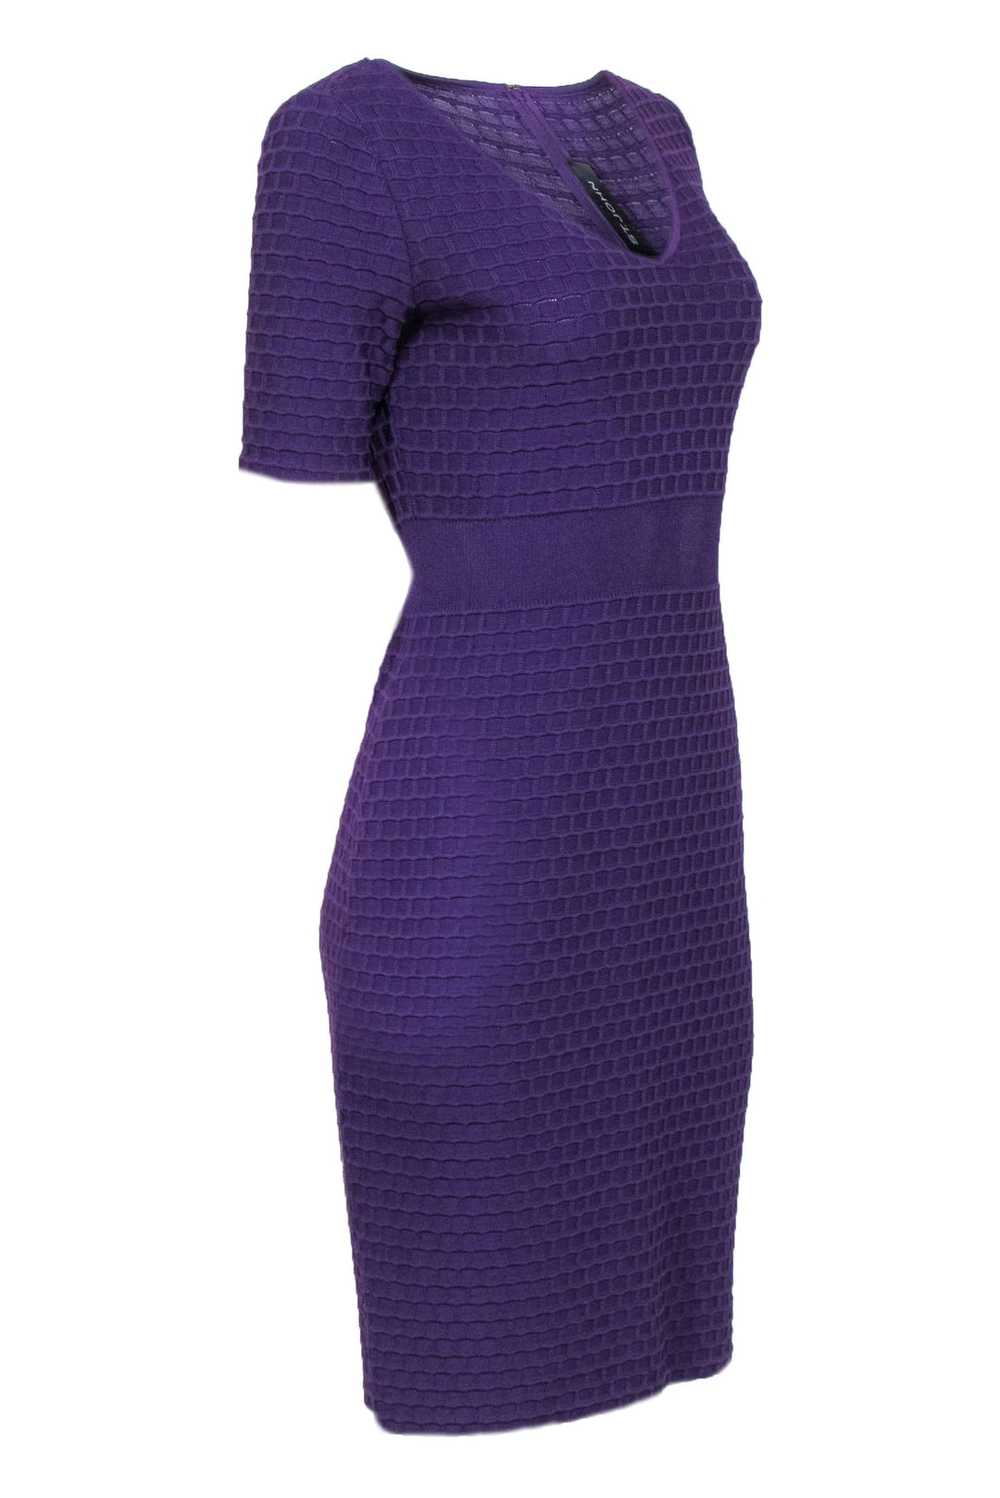 St. John - Purple Textured Knit Sheath Dress Sz 4 - image 2